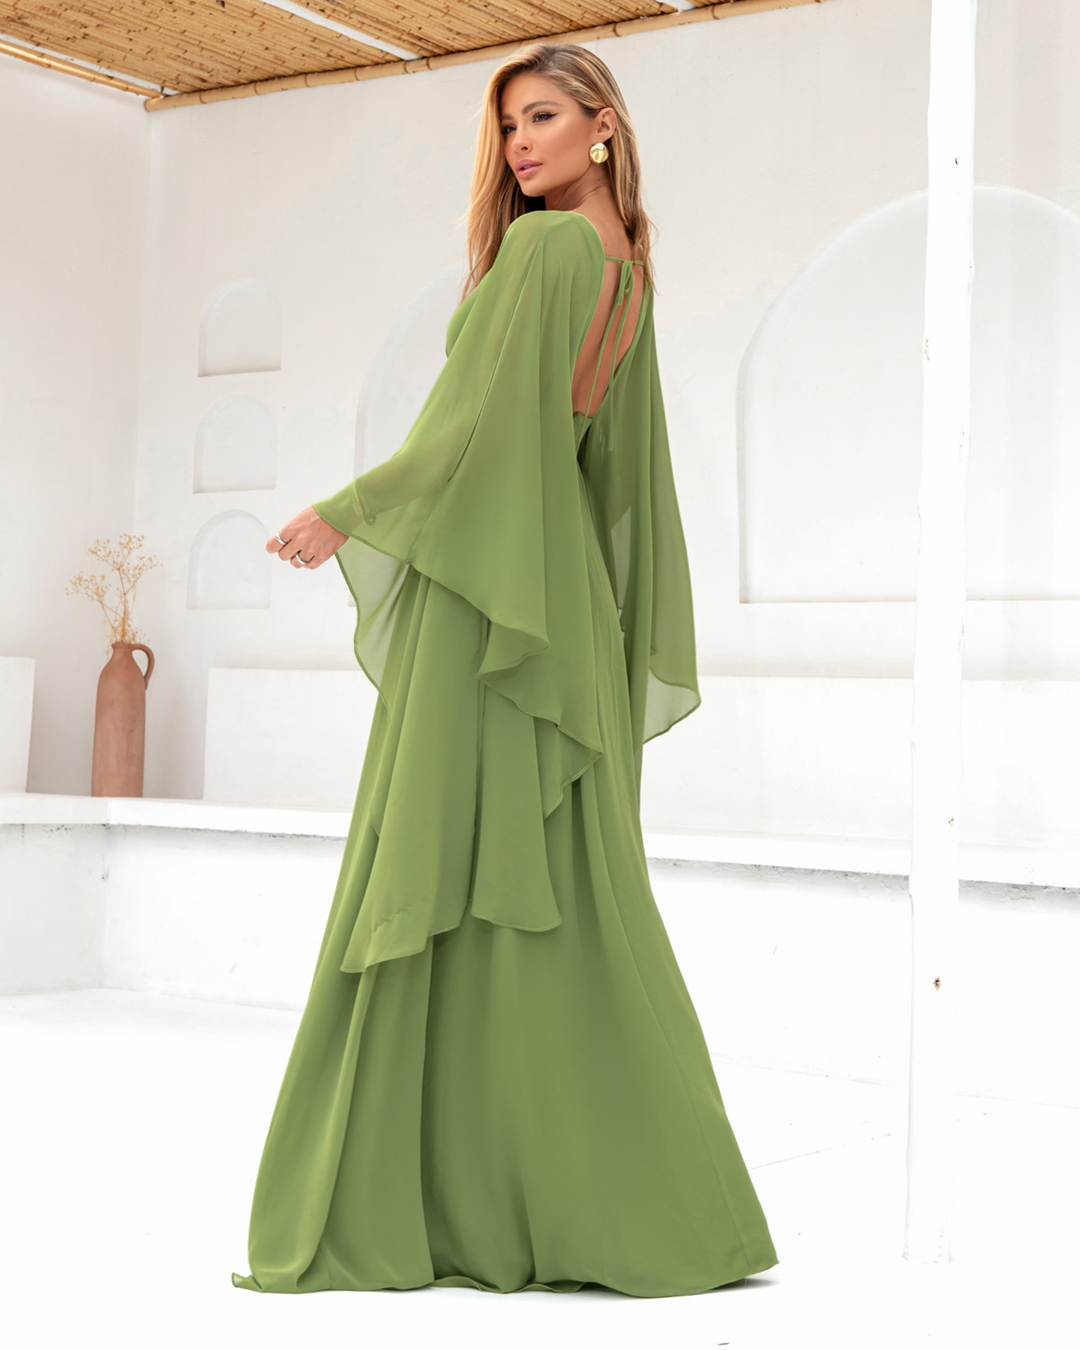 Dot Clothing - Vestido Dot Clothing Longo Verde - 2056VERDE